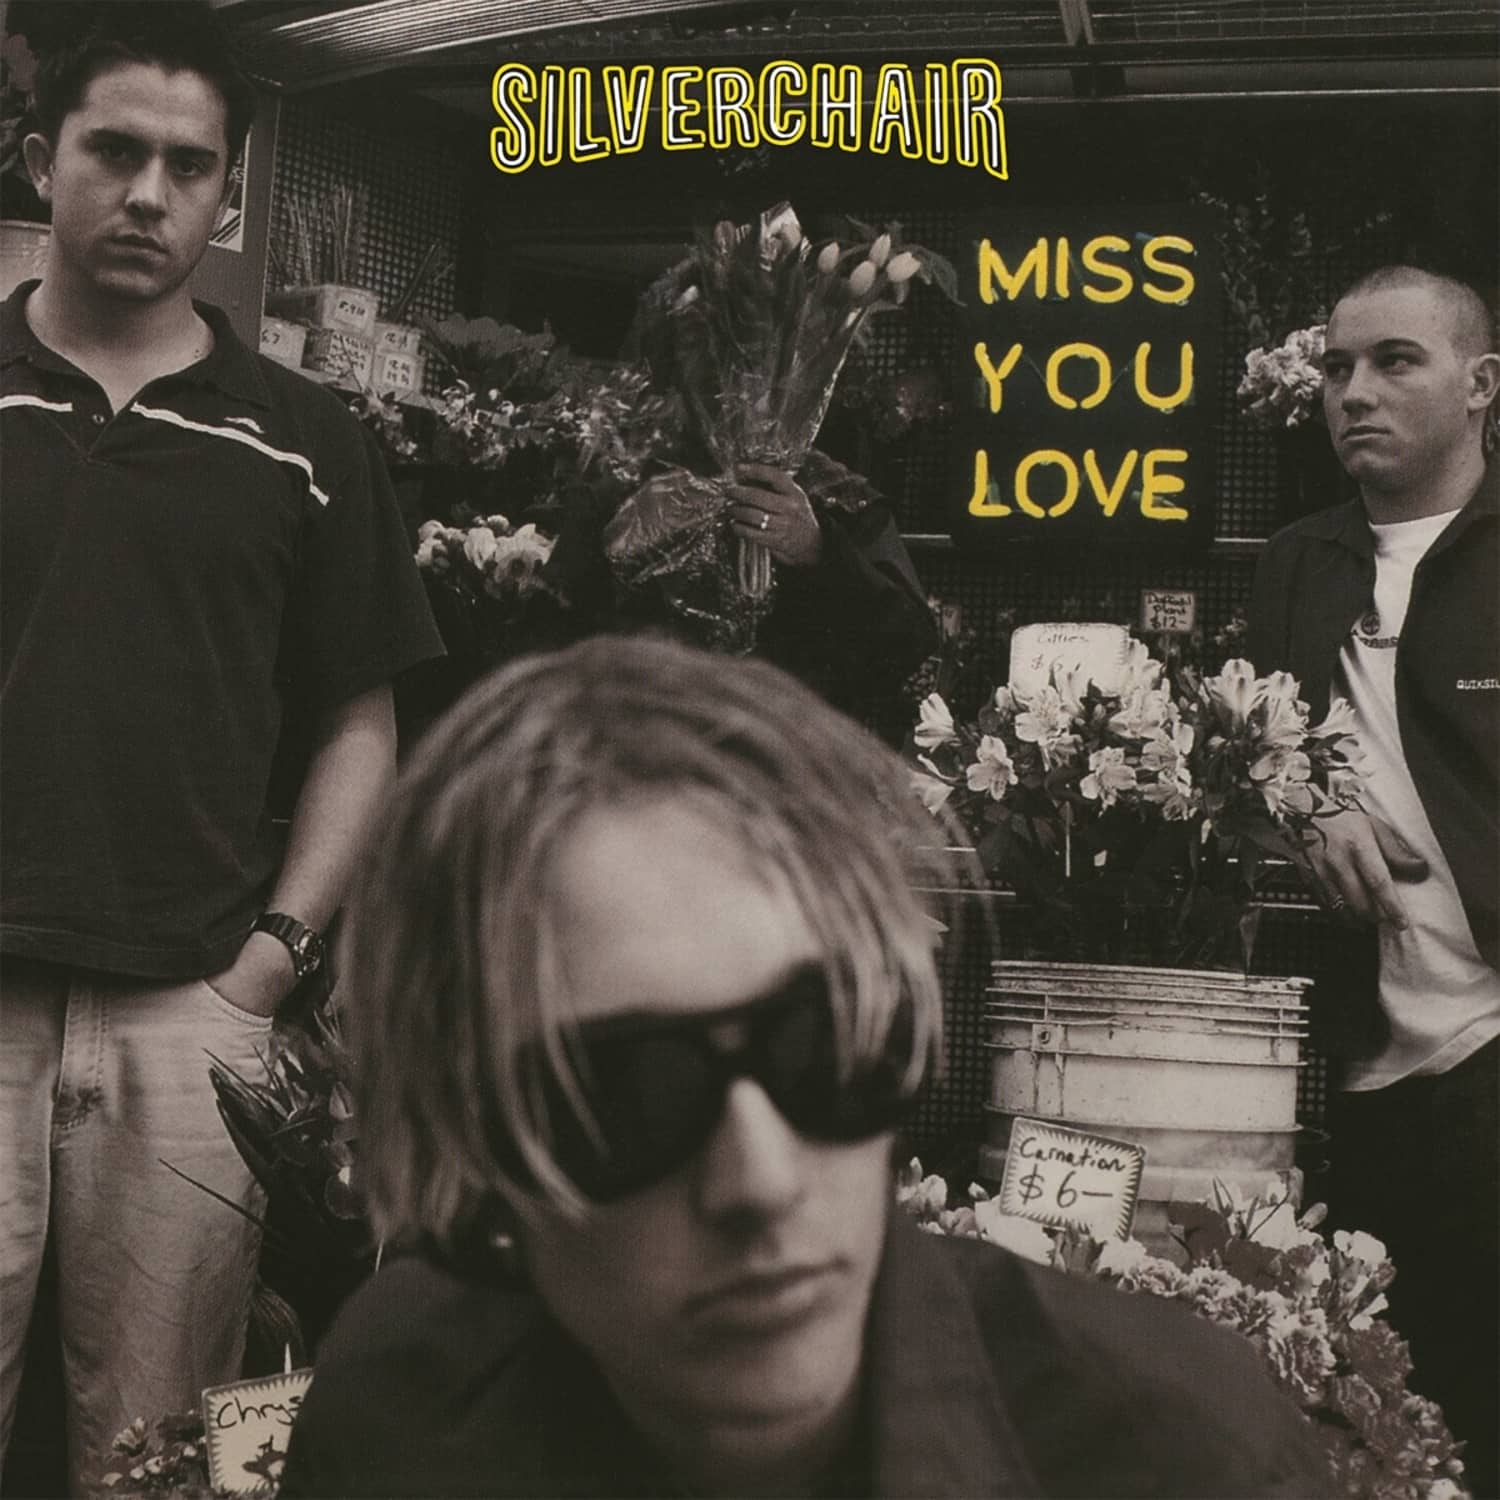 Silverchair - MISS YOU LOVE 